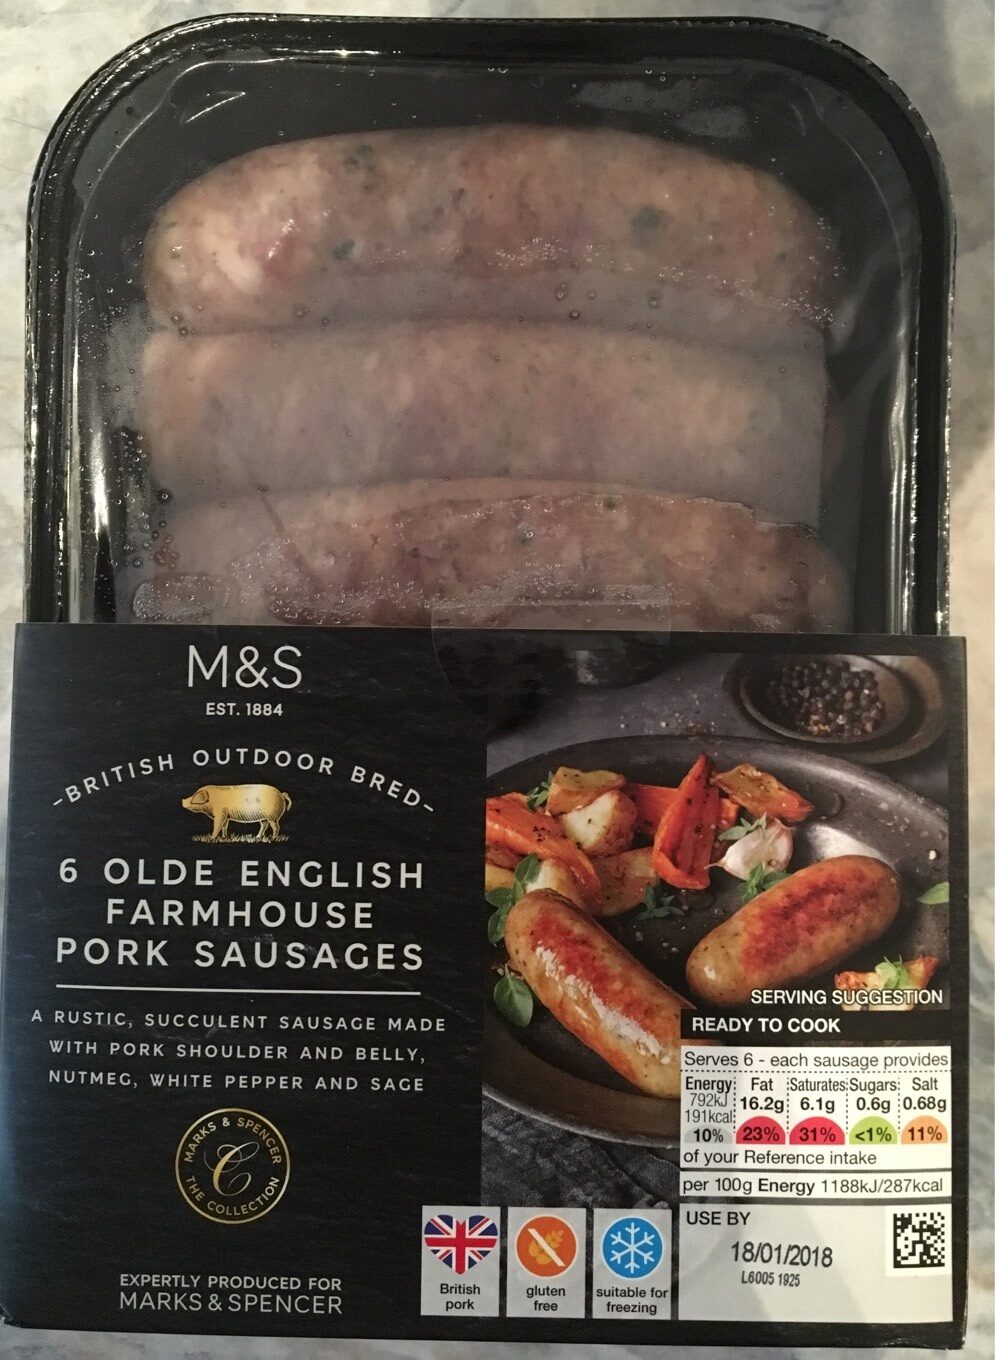 6 Olde english farmhouse pork sausages - Product